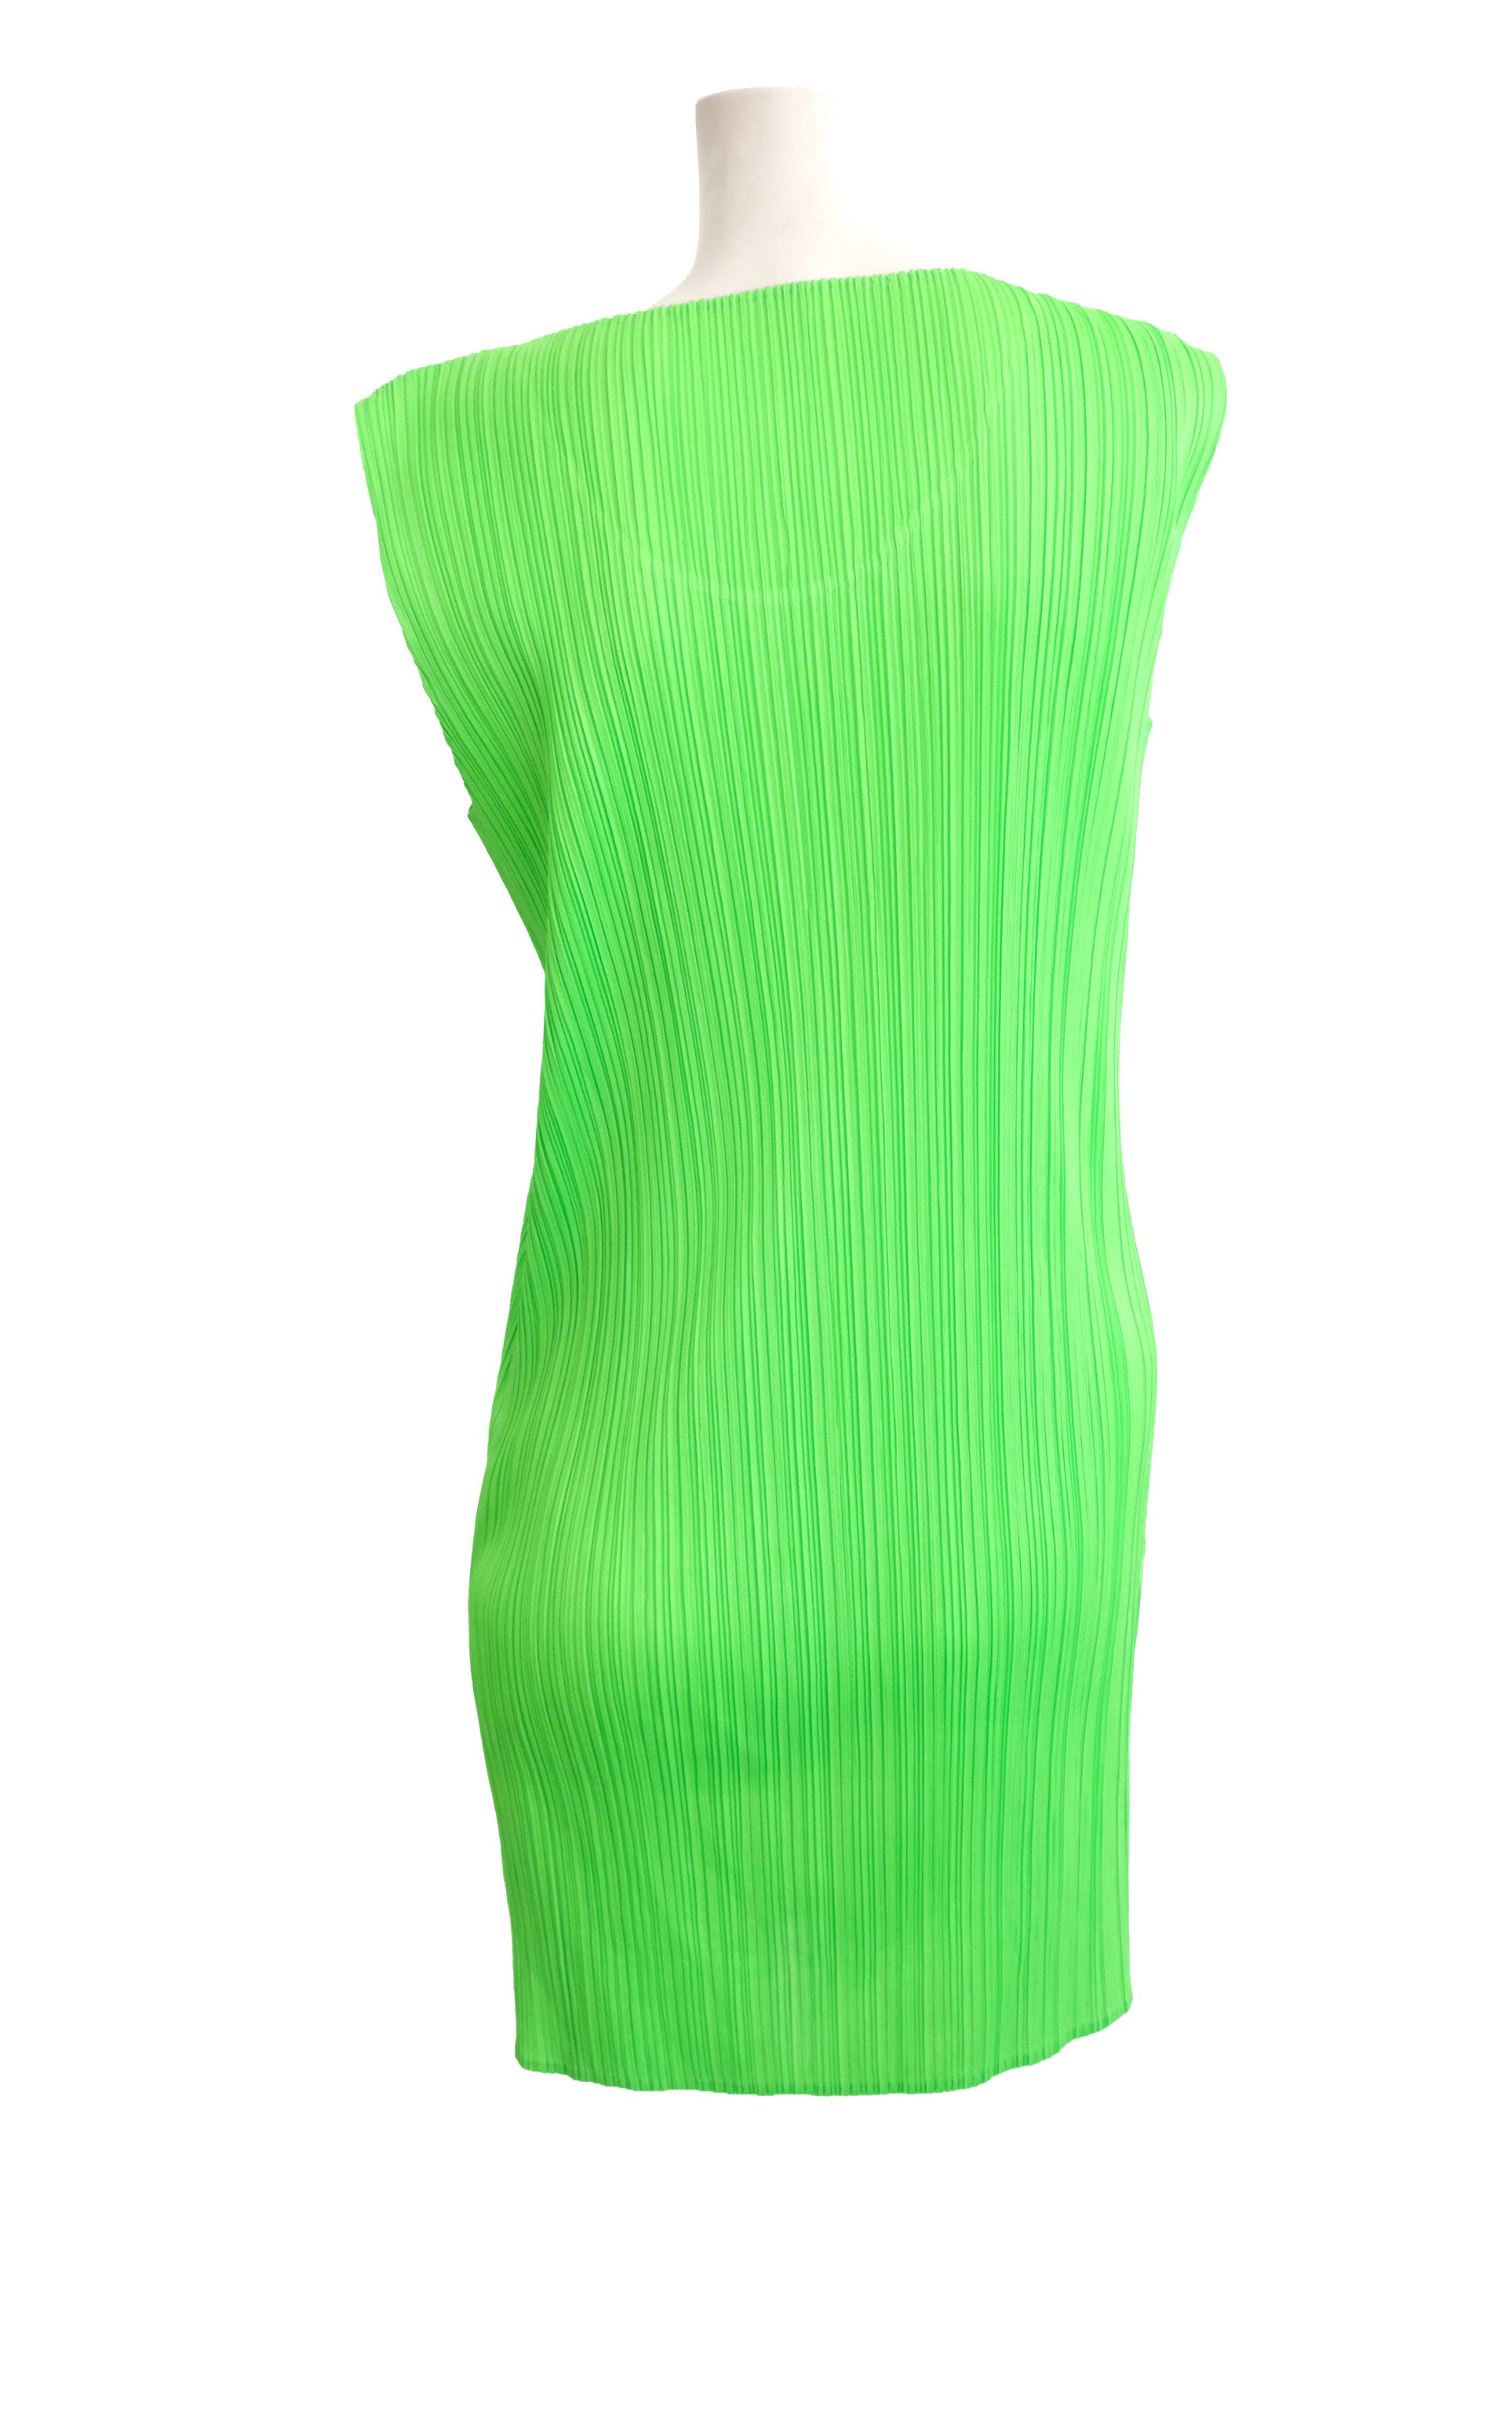 Issey Miyake Lime Green Plissé Sleeveless Tunic, M